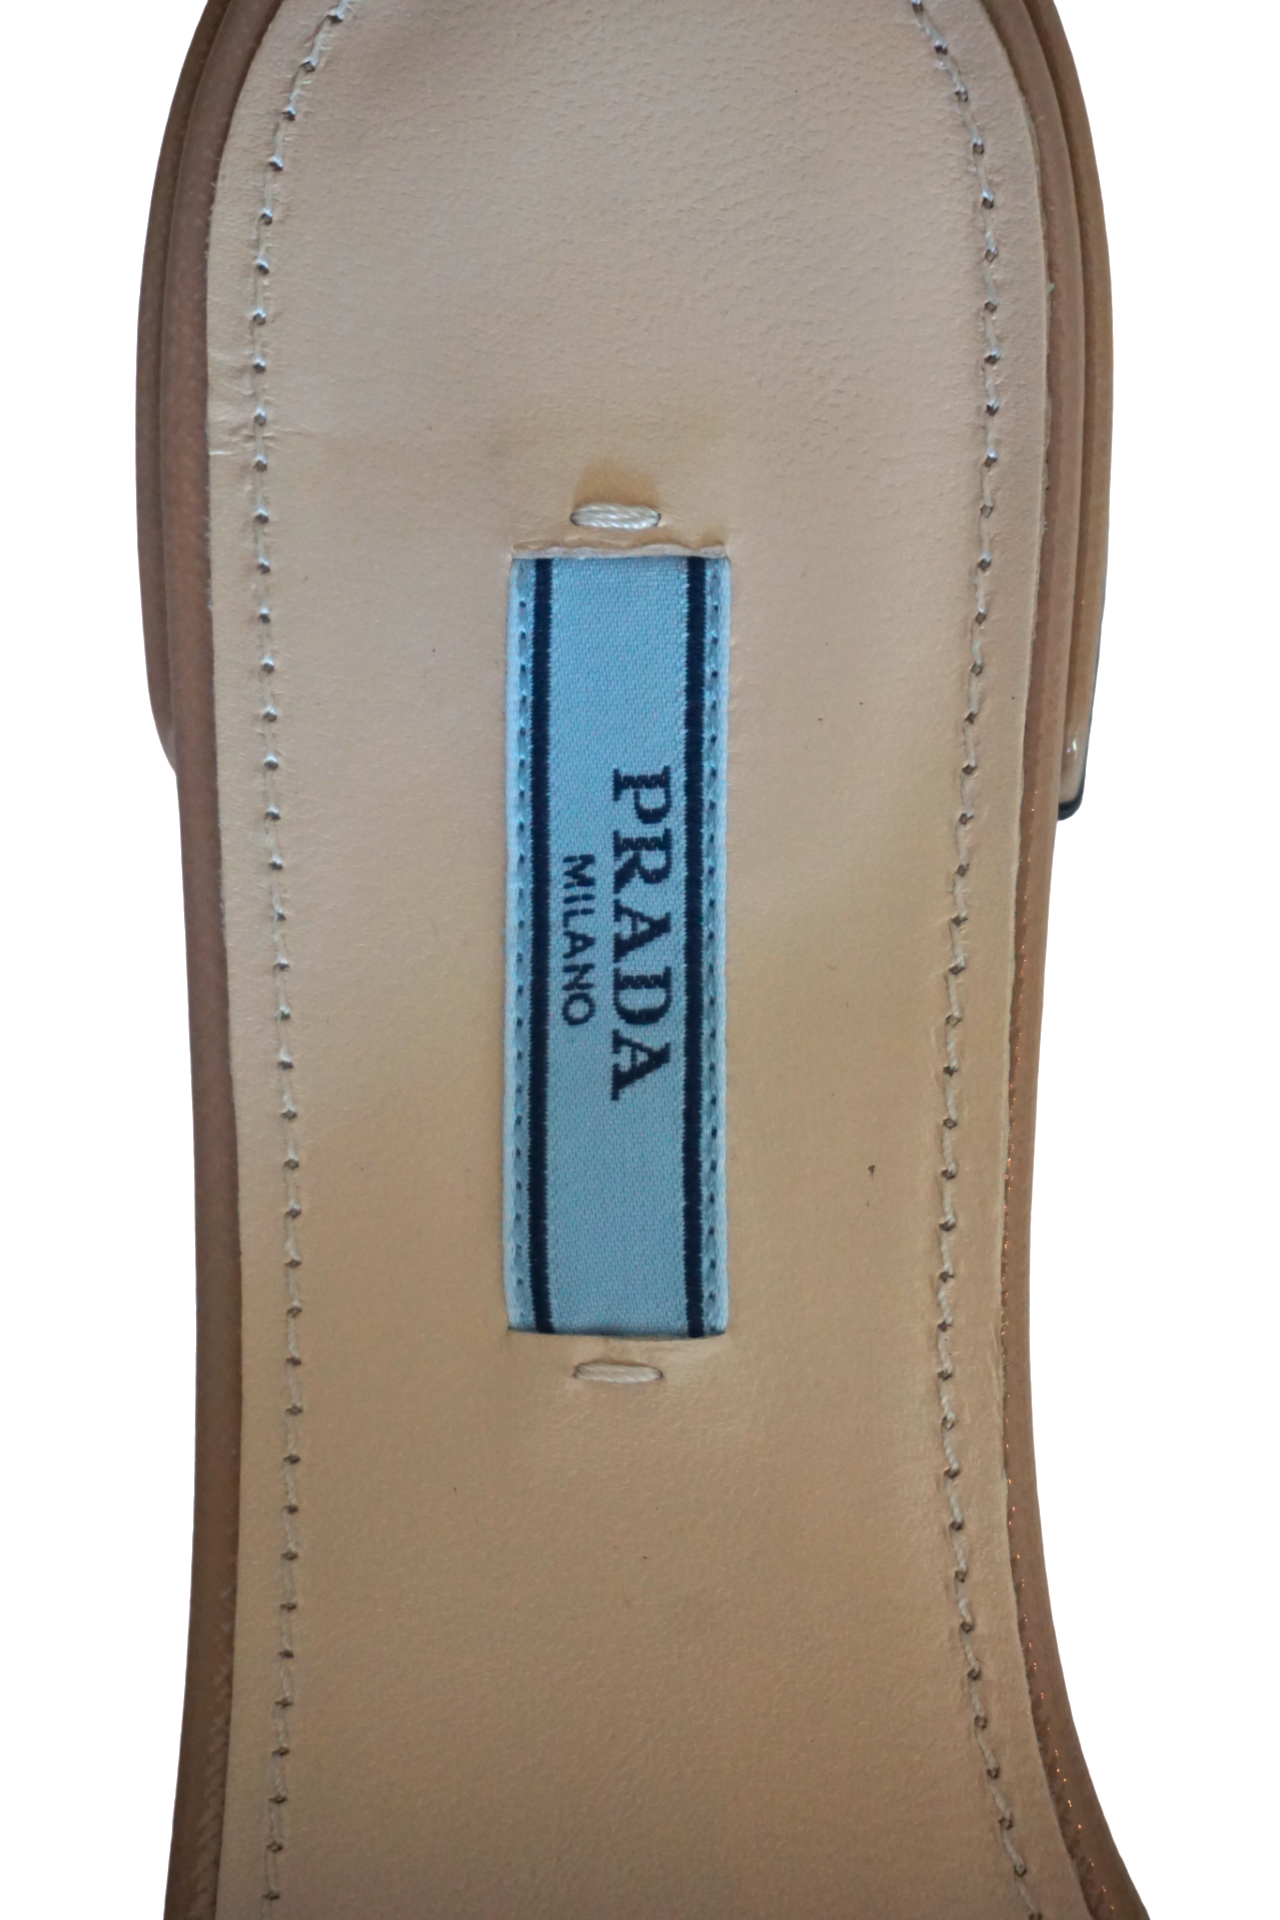 Prada Saffiano Leather Flats